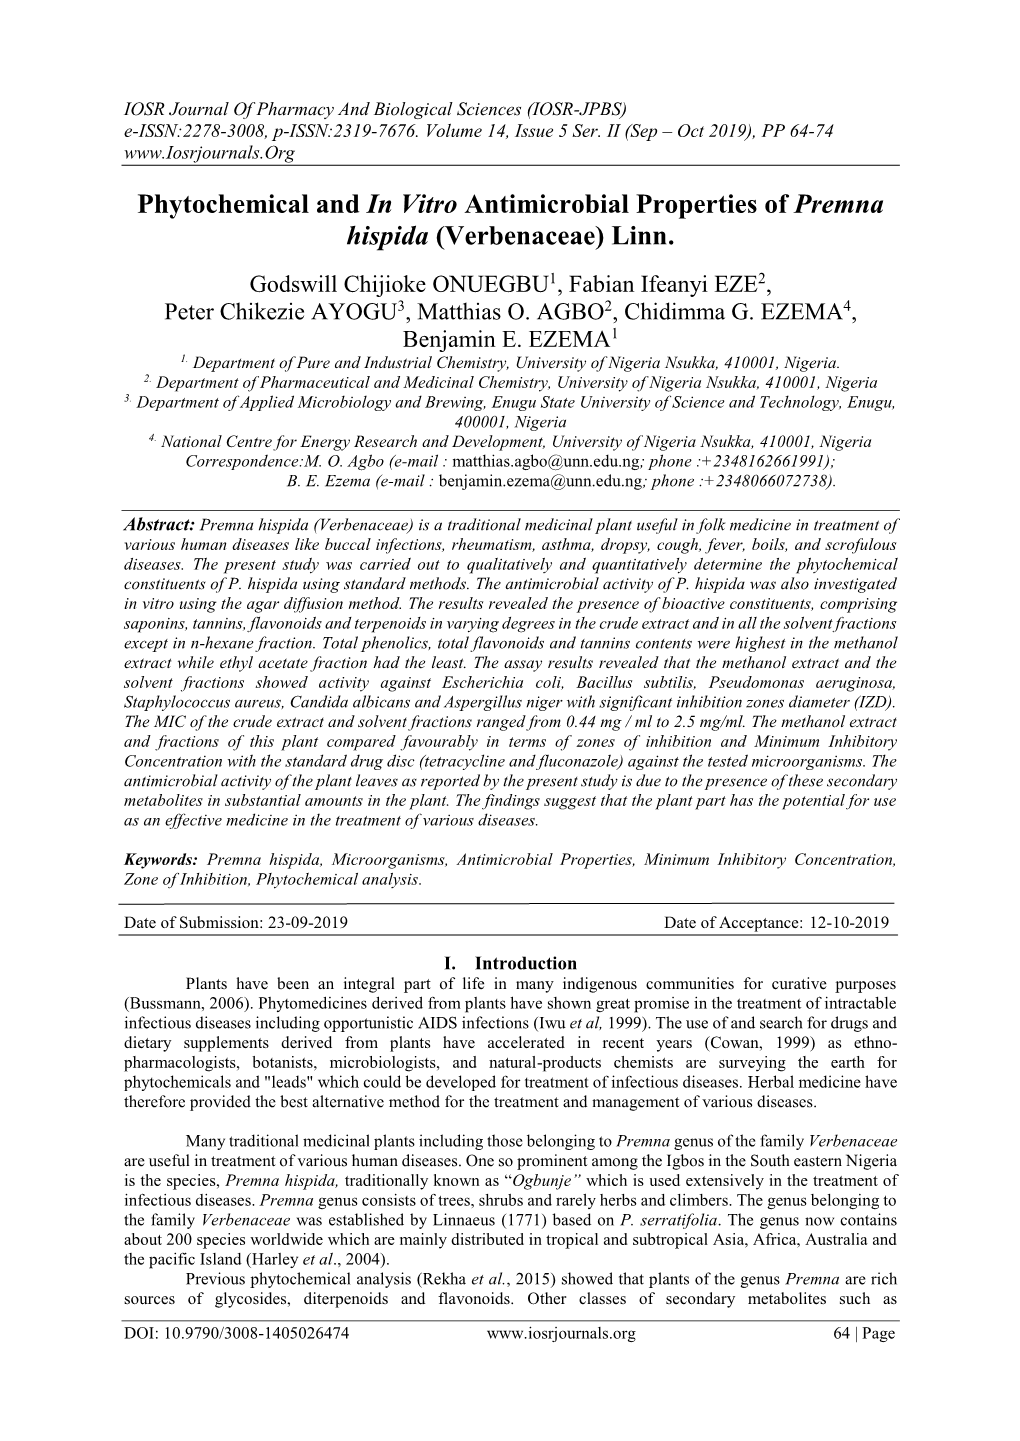 Phytochemical and in Vitro Antimicrobial Properties of Premna Hispida (Verbenaceae) Linn